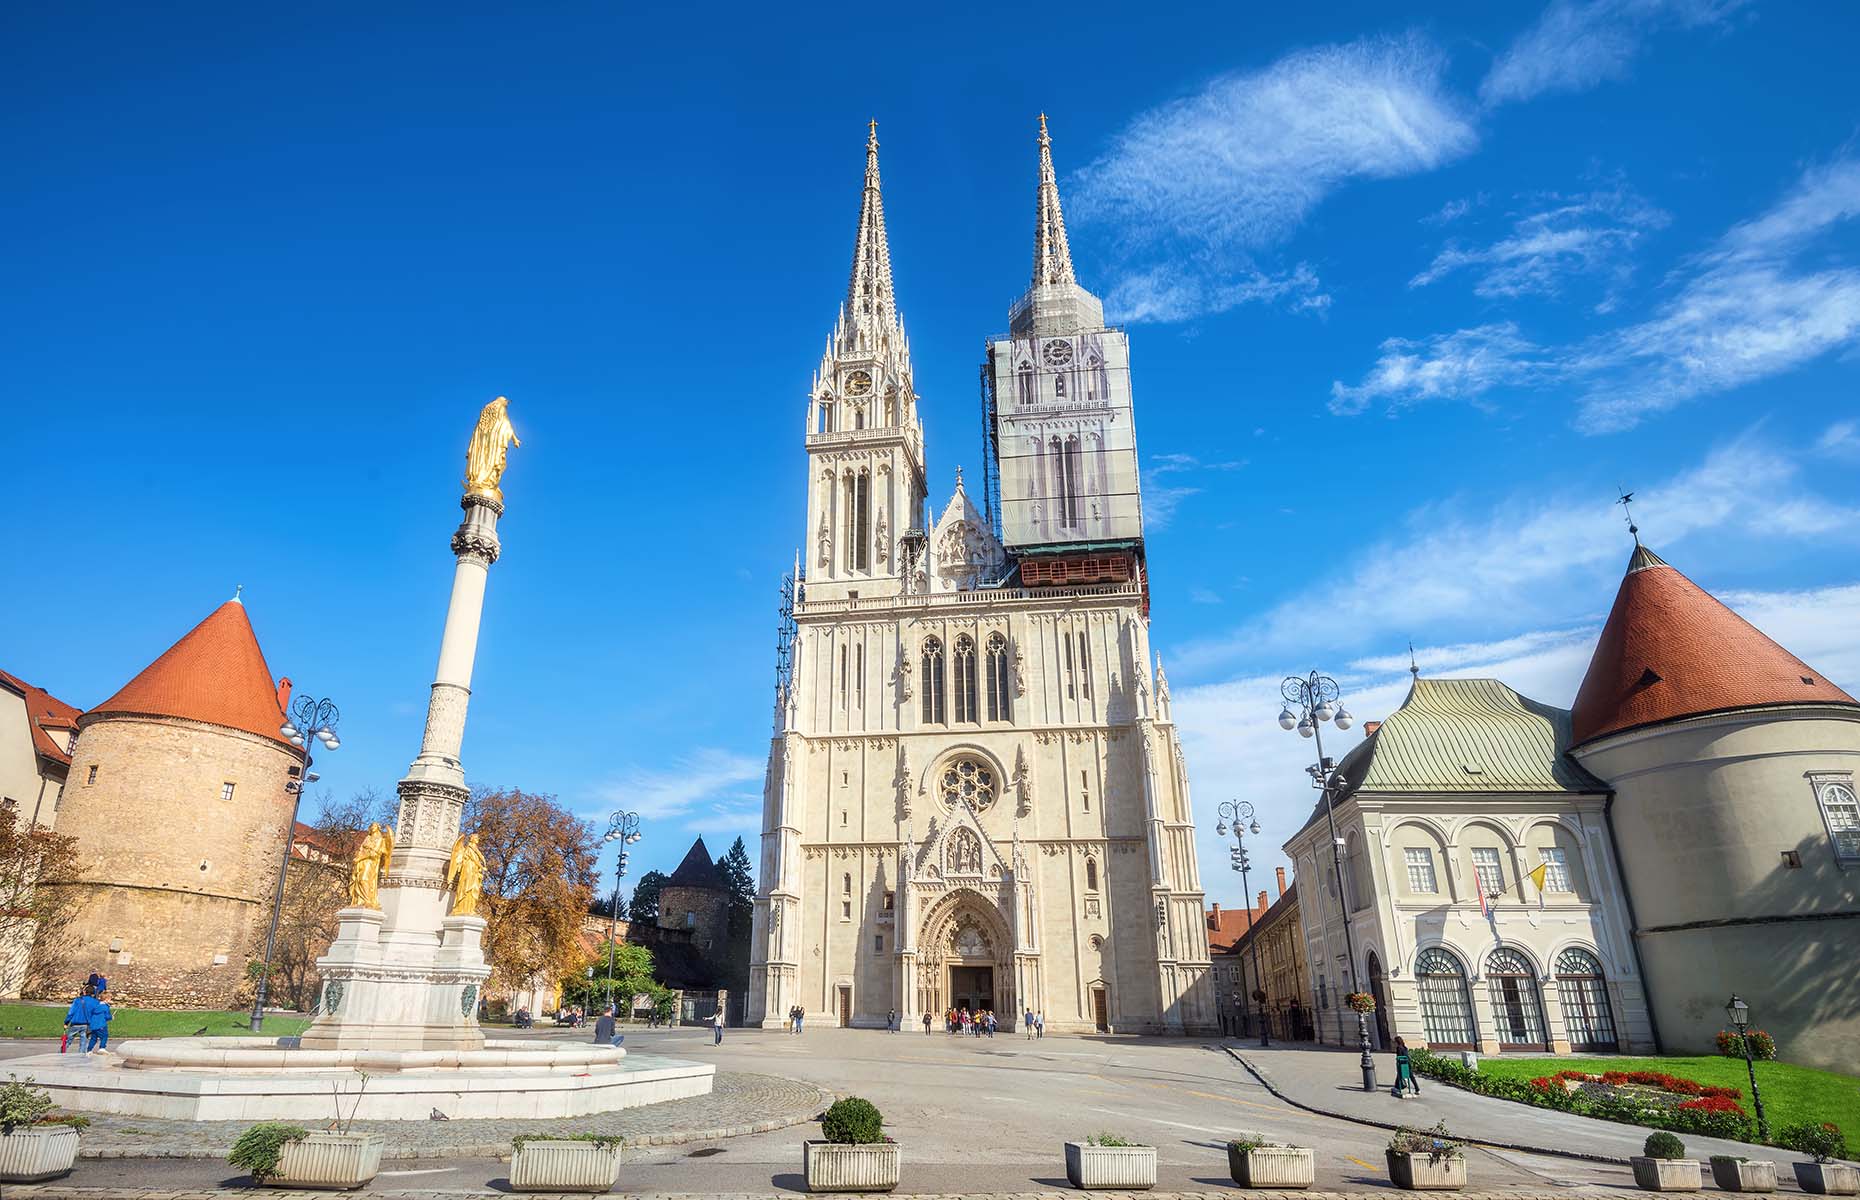 Zagreb Cathedral (Image: Valery Bareta/Shutterstock)